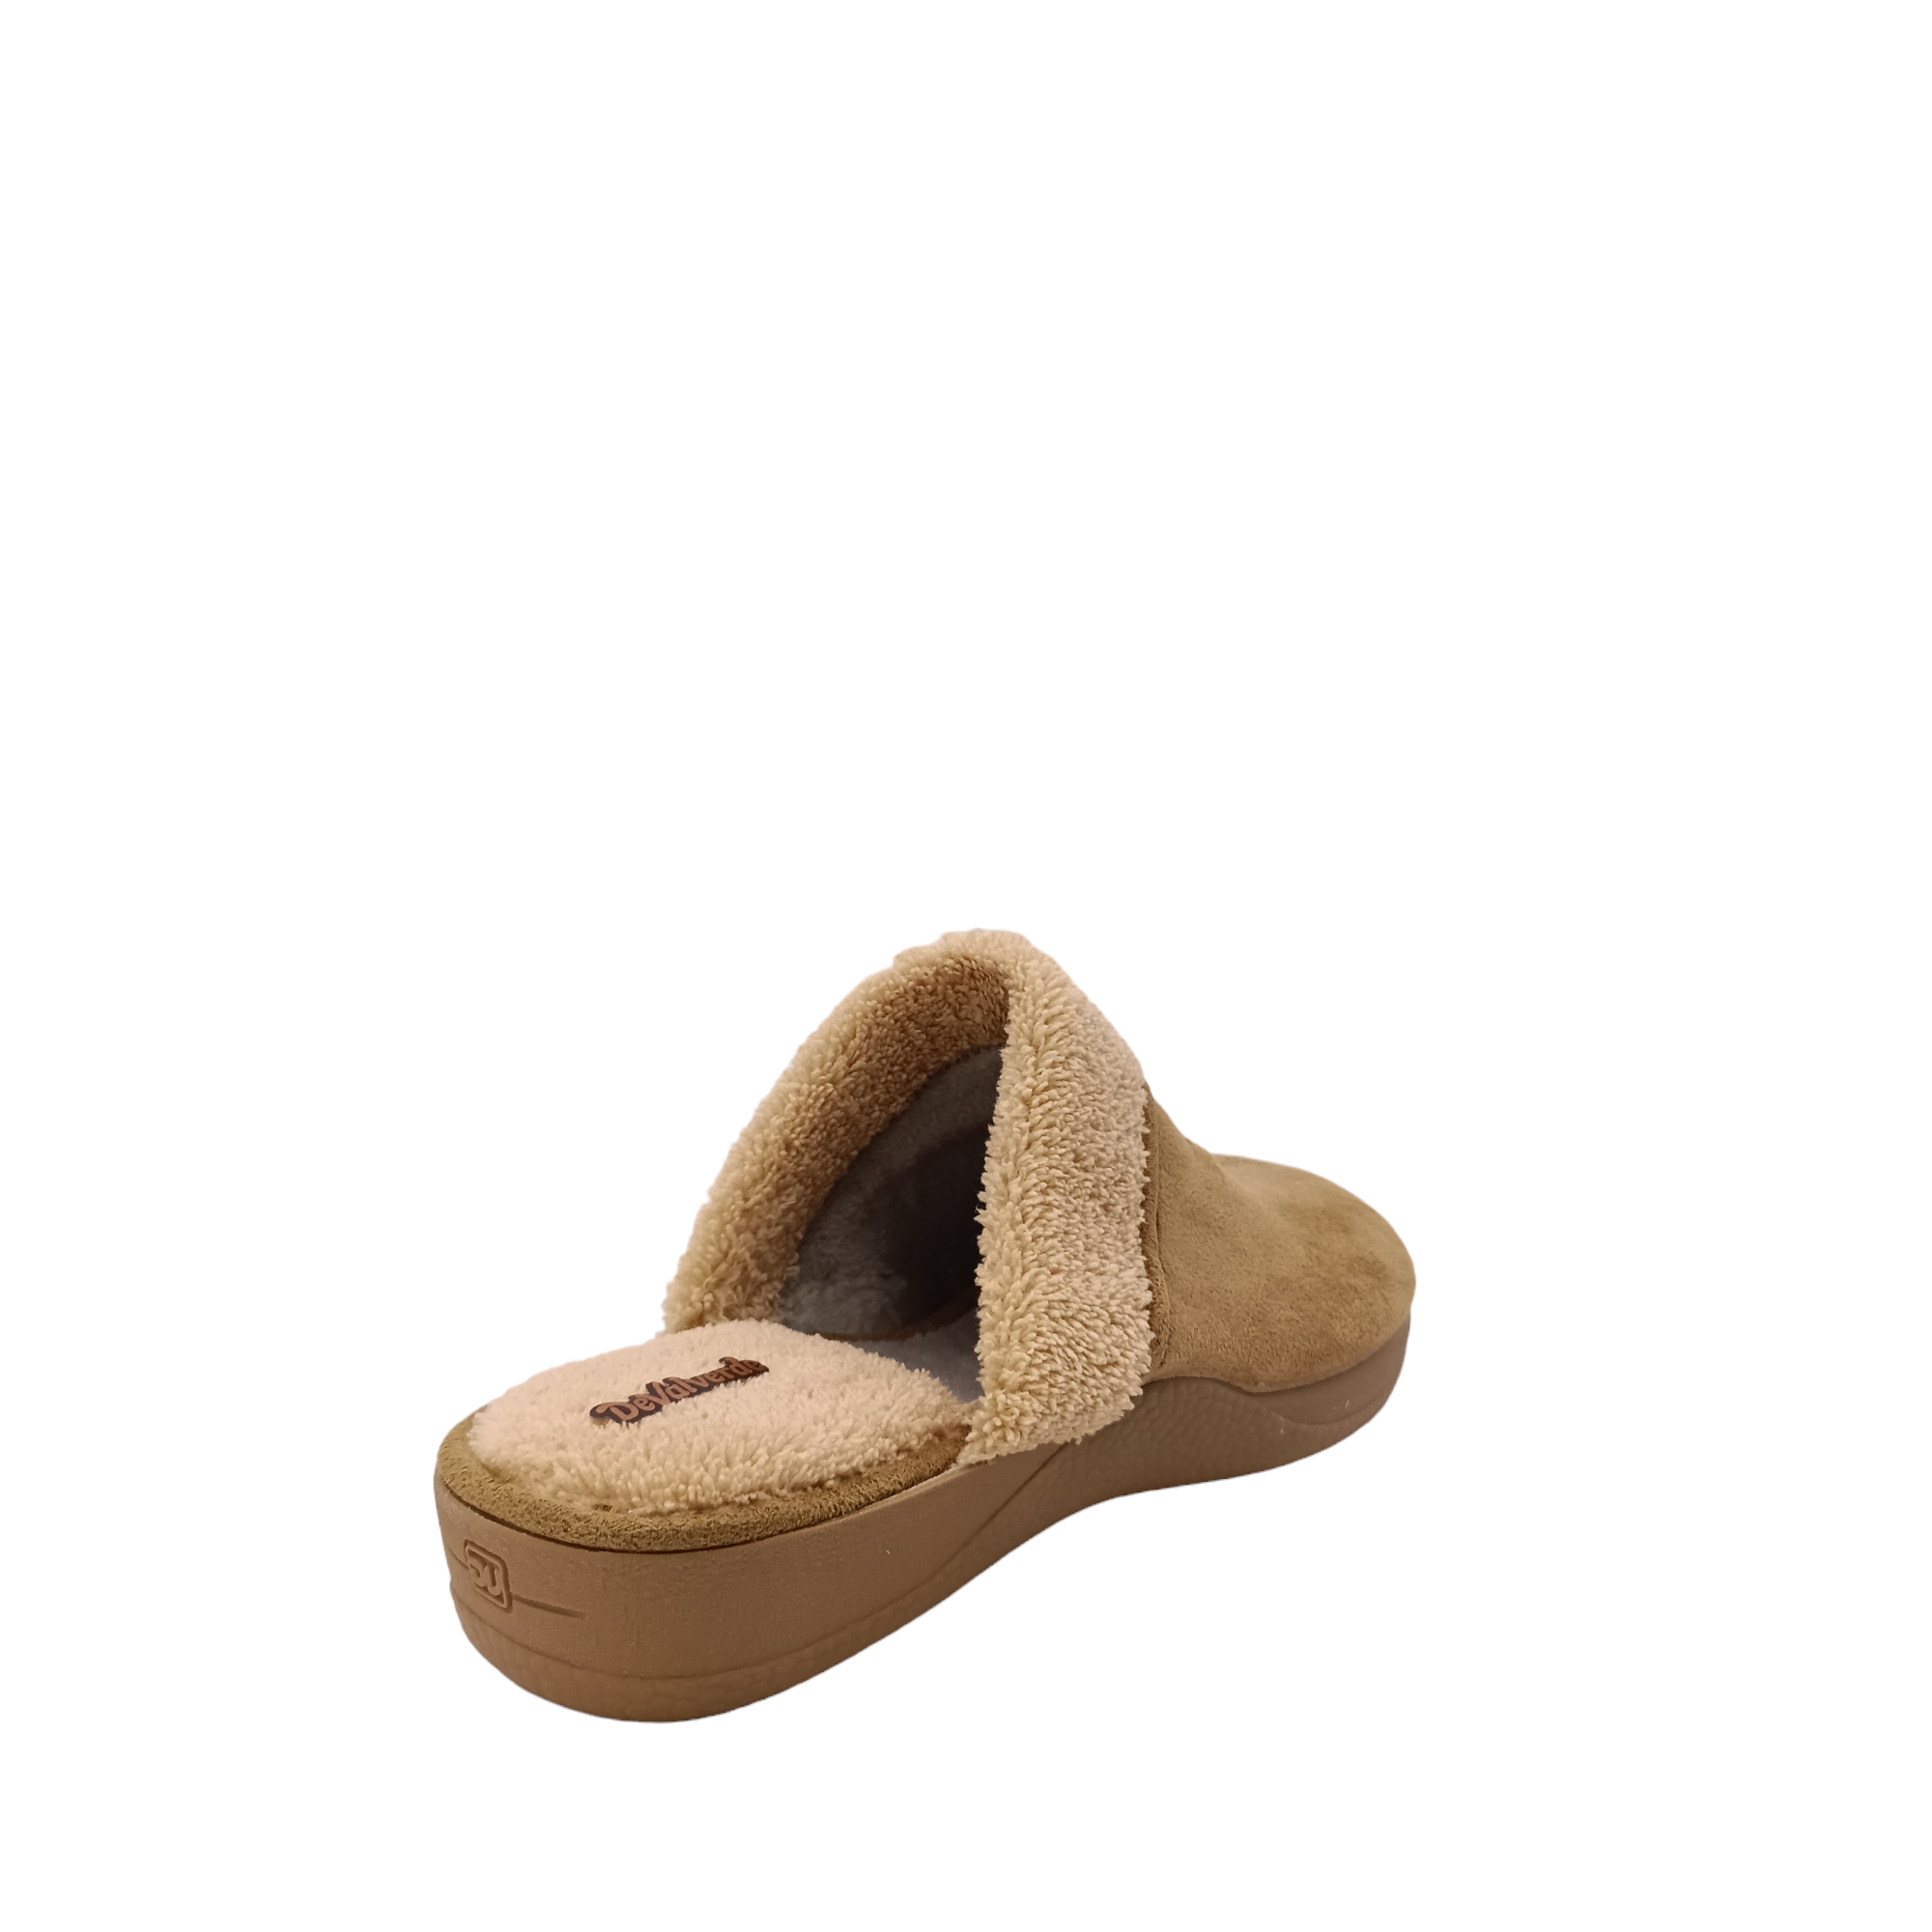 Shop Comfy DeValverde - with shoe&me - from DeValverde - Slippers - Slipper, Winter, Womens